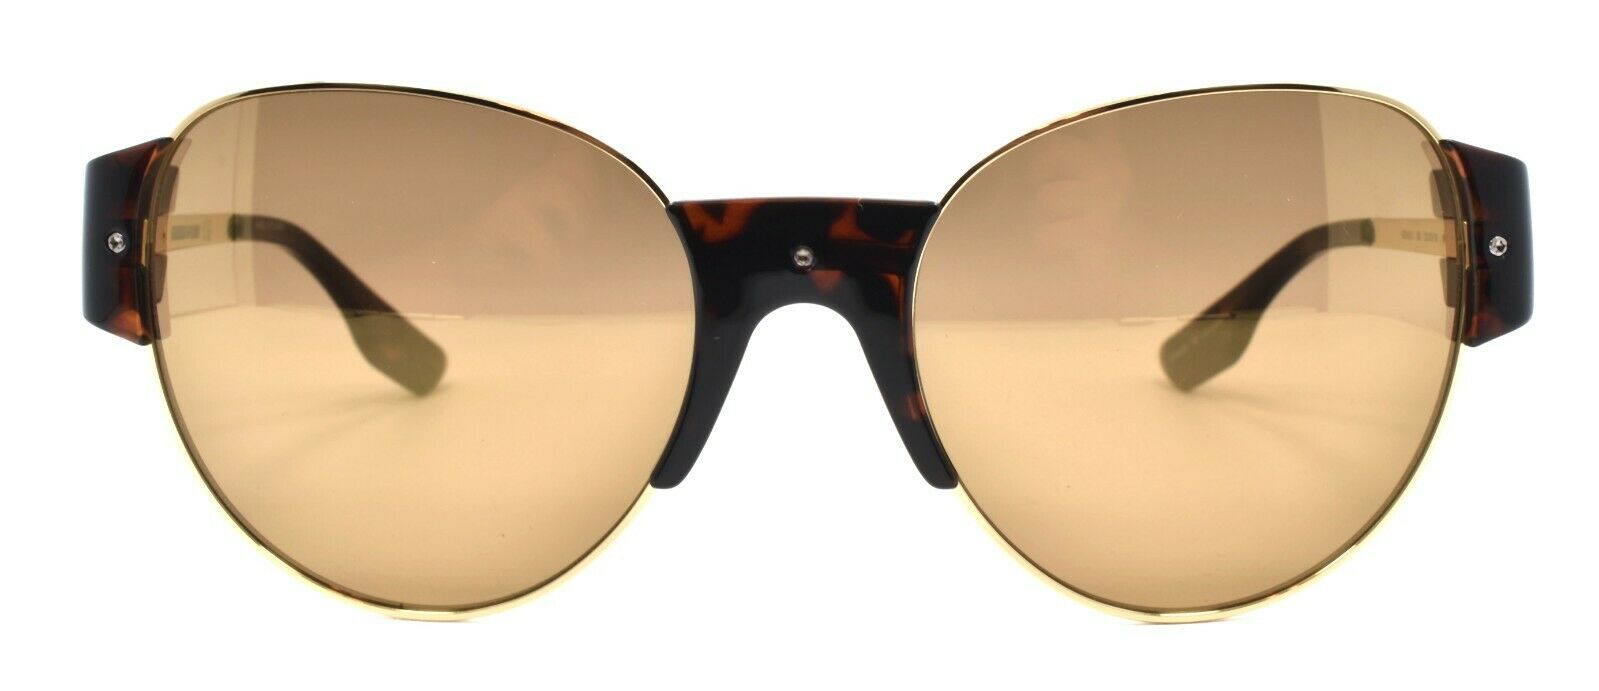 2-McQ Alexander McQueen MQ0001S 003 Women's Sunglasses Gold & Havana / Mirrored-889652001074-IKSpecs